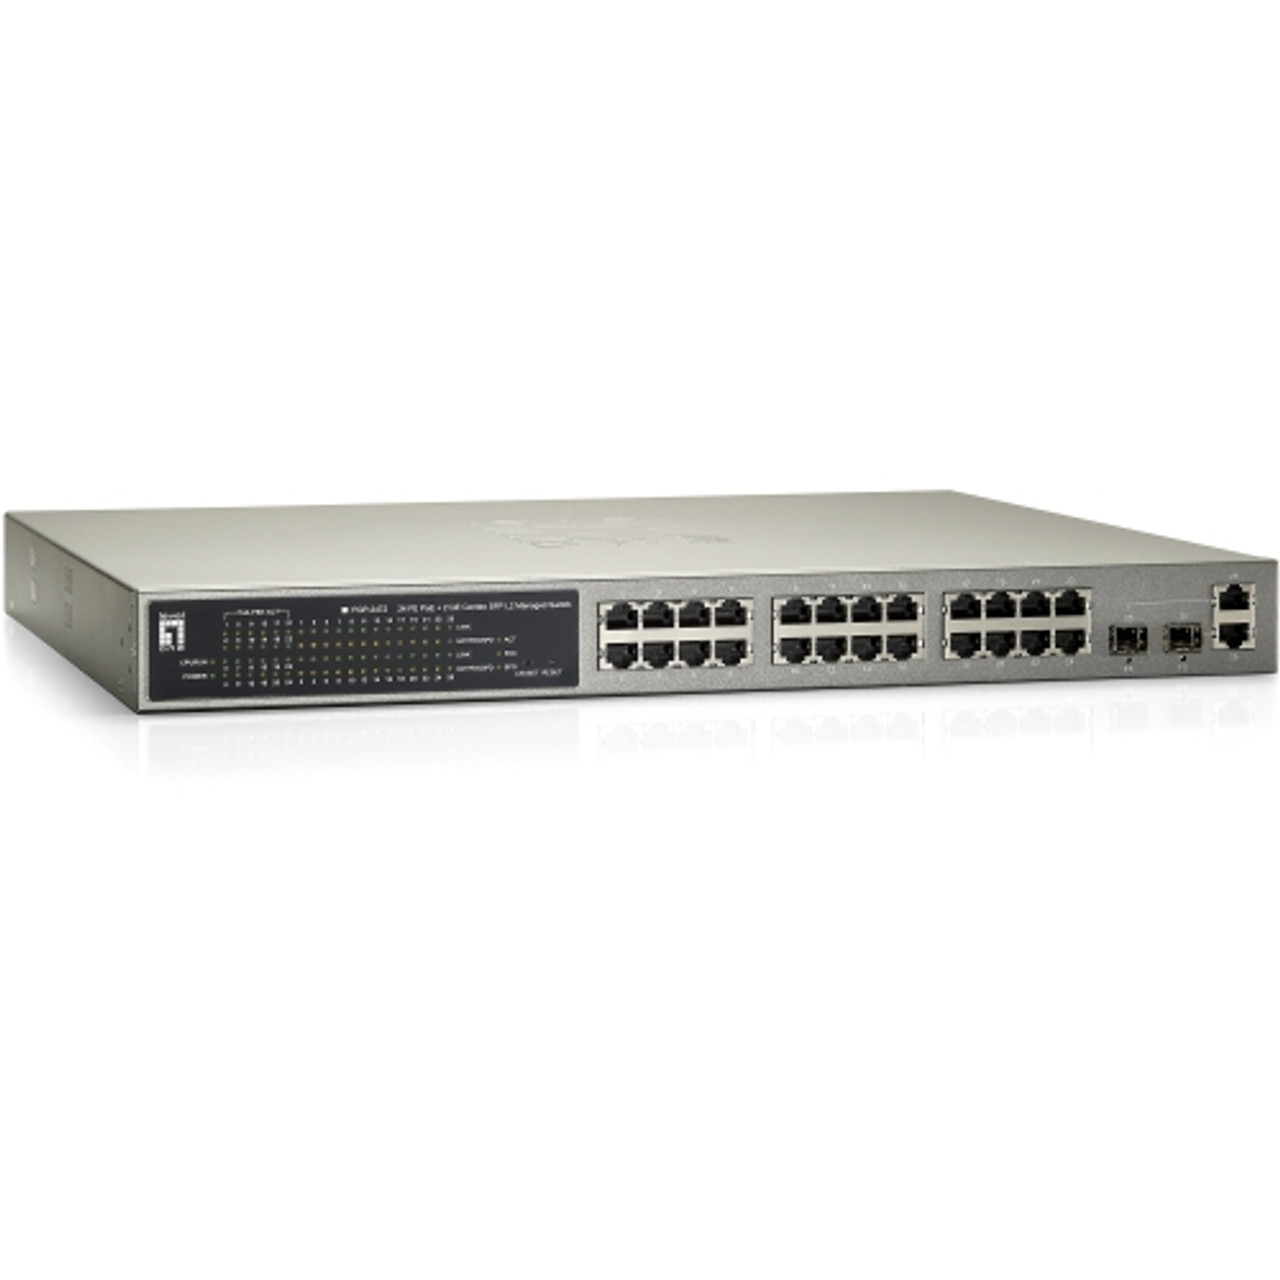 FGP-2472 LevelOne Managed 24-Port PoE 10/100 + 2 SFP-Port Gigabit 19 Rack Mountable Switch 24 x POE 2 x RJ-45 2 x SFP Slots 10/100/1000Base-T, 10/100Base-TX